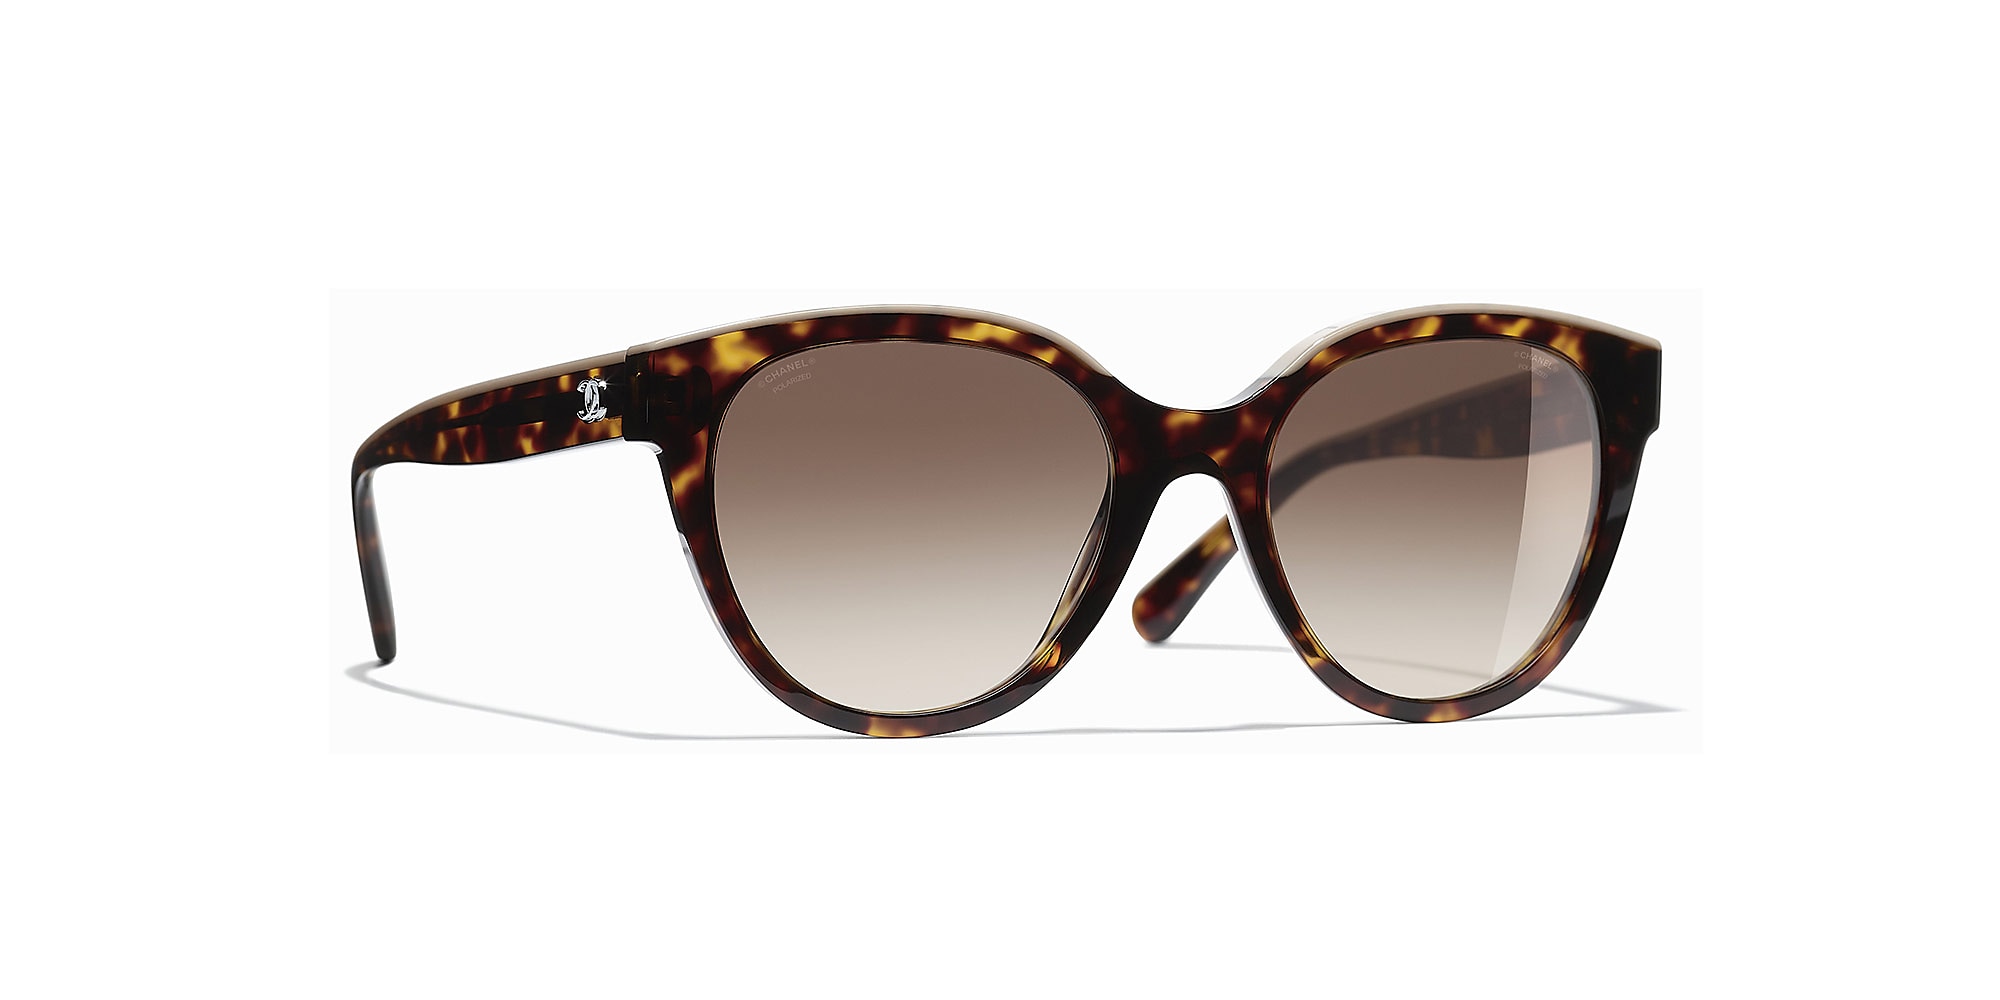 Sunglasses CHANEL CH 5380 C501S8 5617 Woman noir butterfly Full Frame  Glasses trendy 56mmx17mm 29236CA